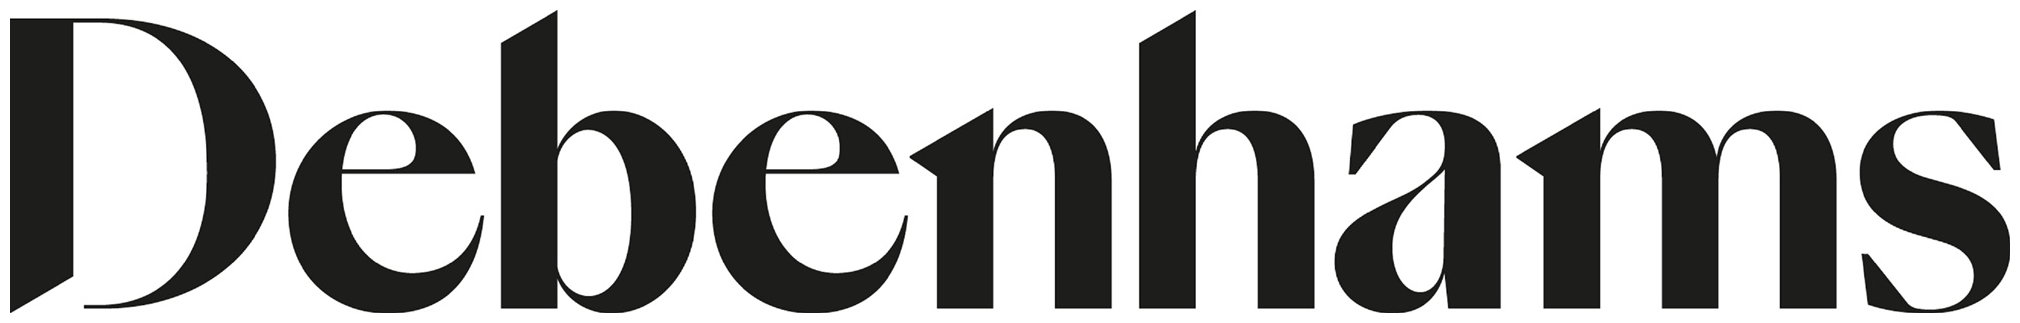 Debenhams Logo - Brand New: New Logo and Identity for Debenhams by Mother Design